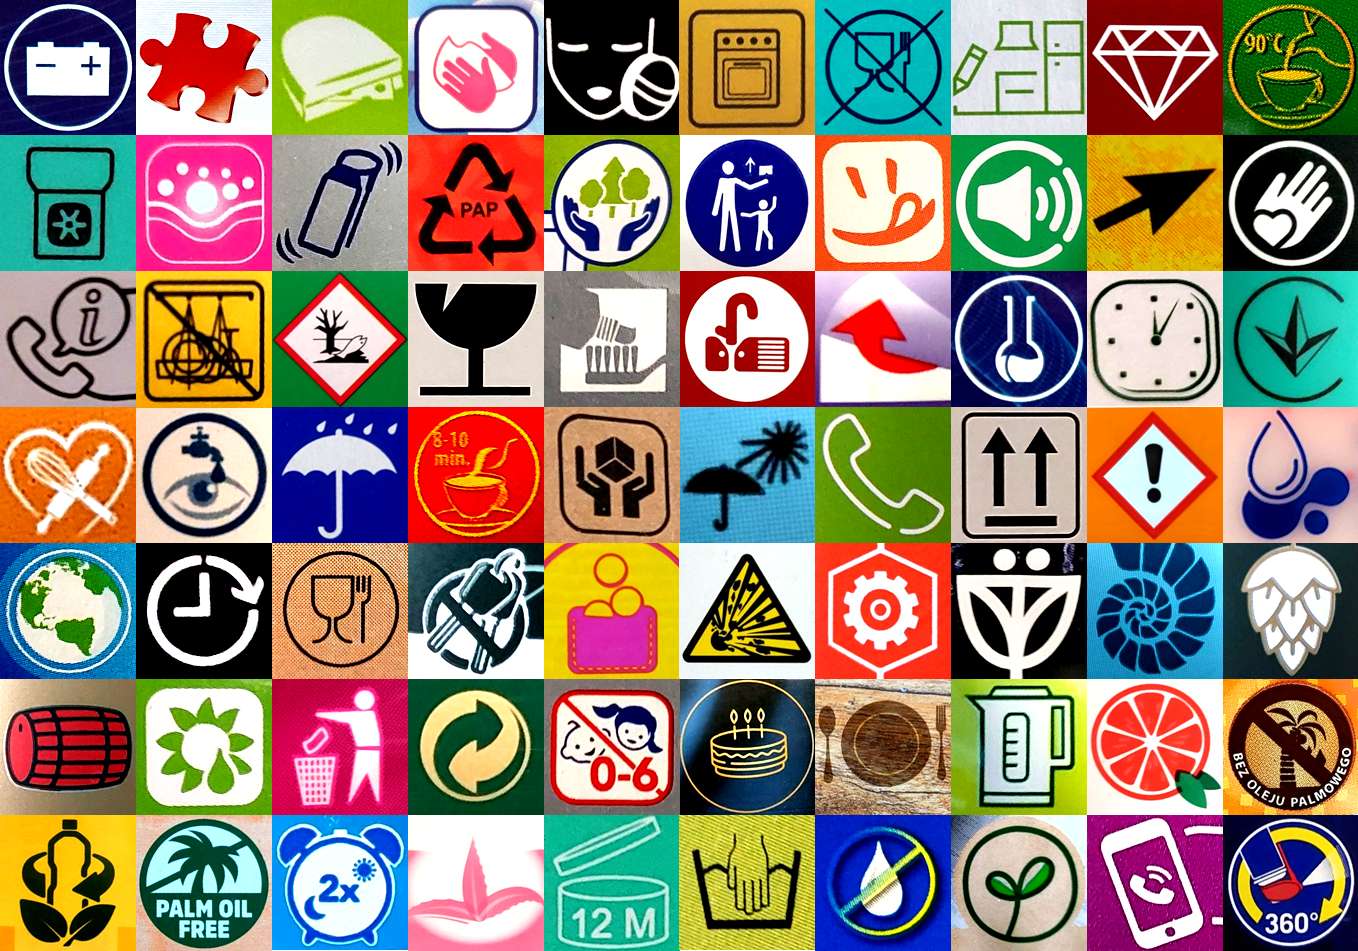 Symbole z opakowań puzzle online ze zdjęcia